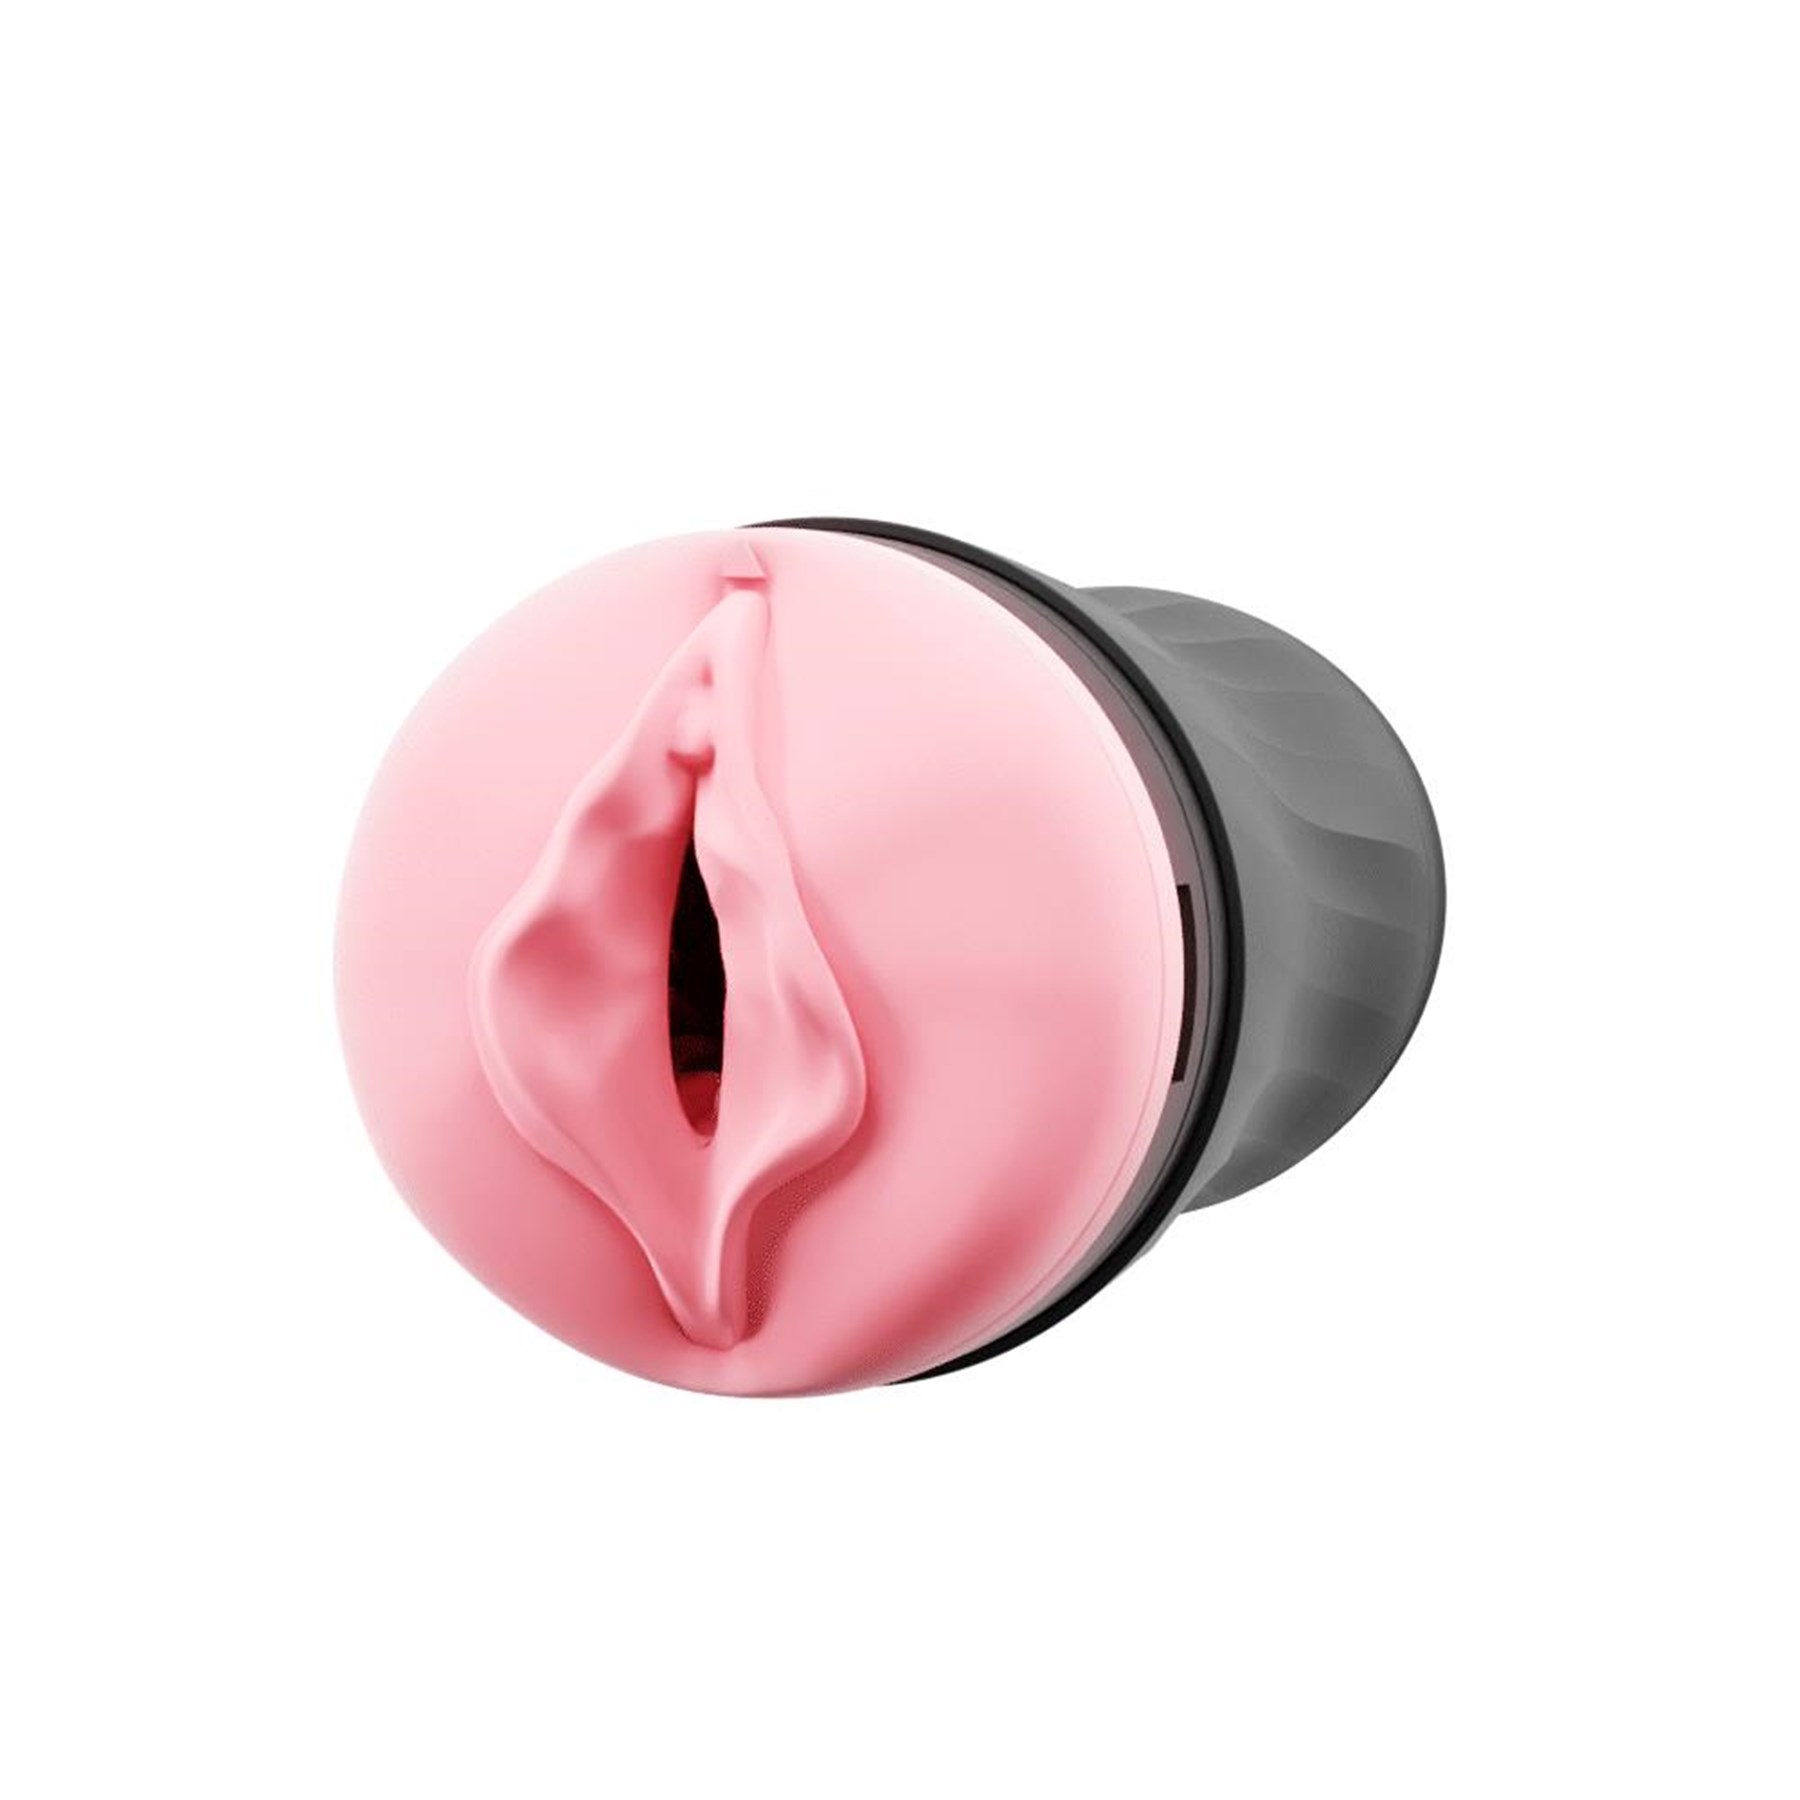 Maxtasy Stroke Master Stroker - Realistic Pink Vagina close up of opening